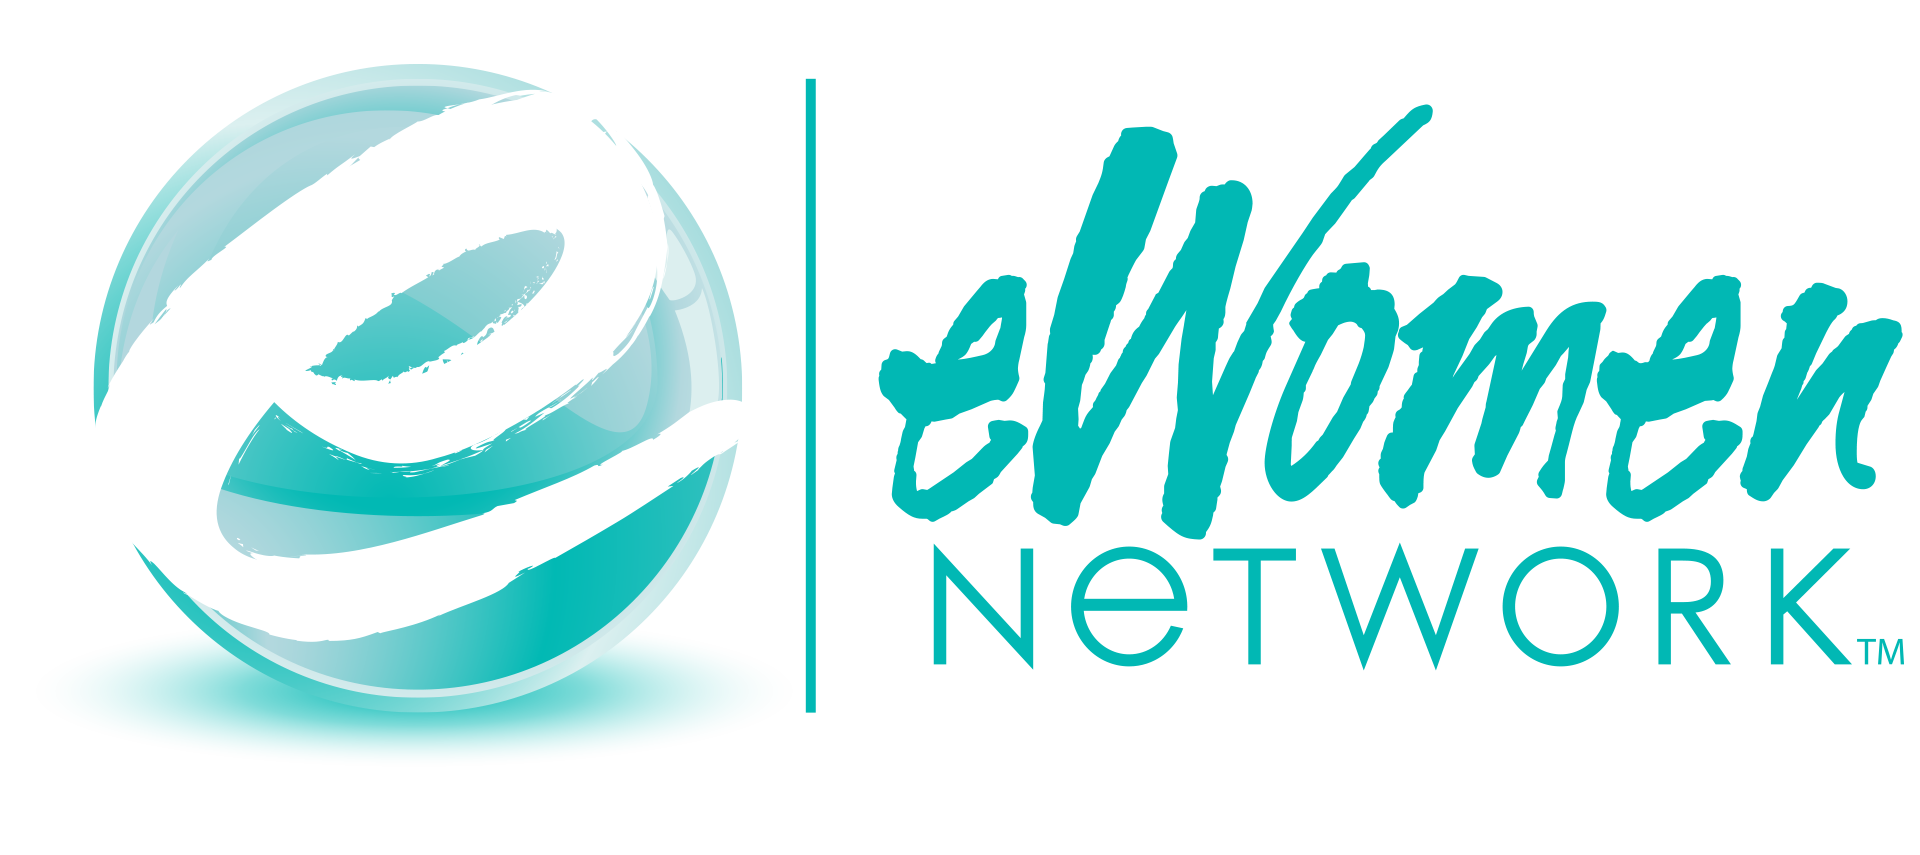 eWomens Network